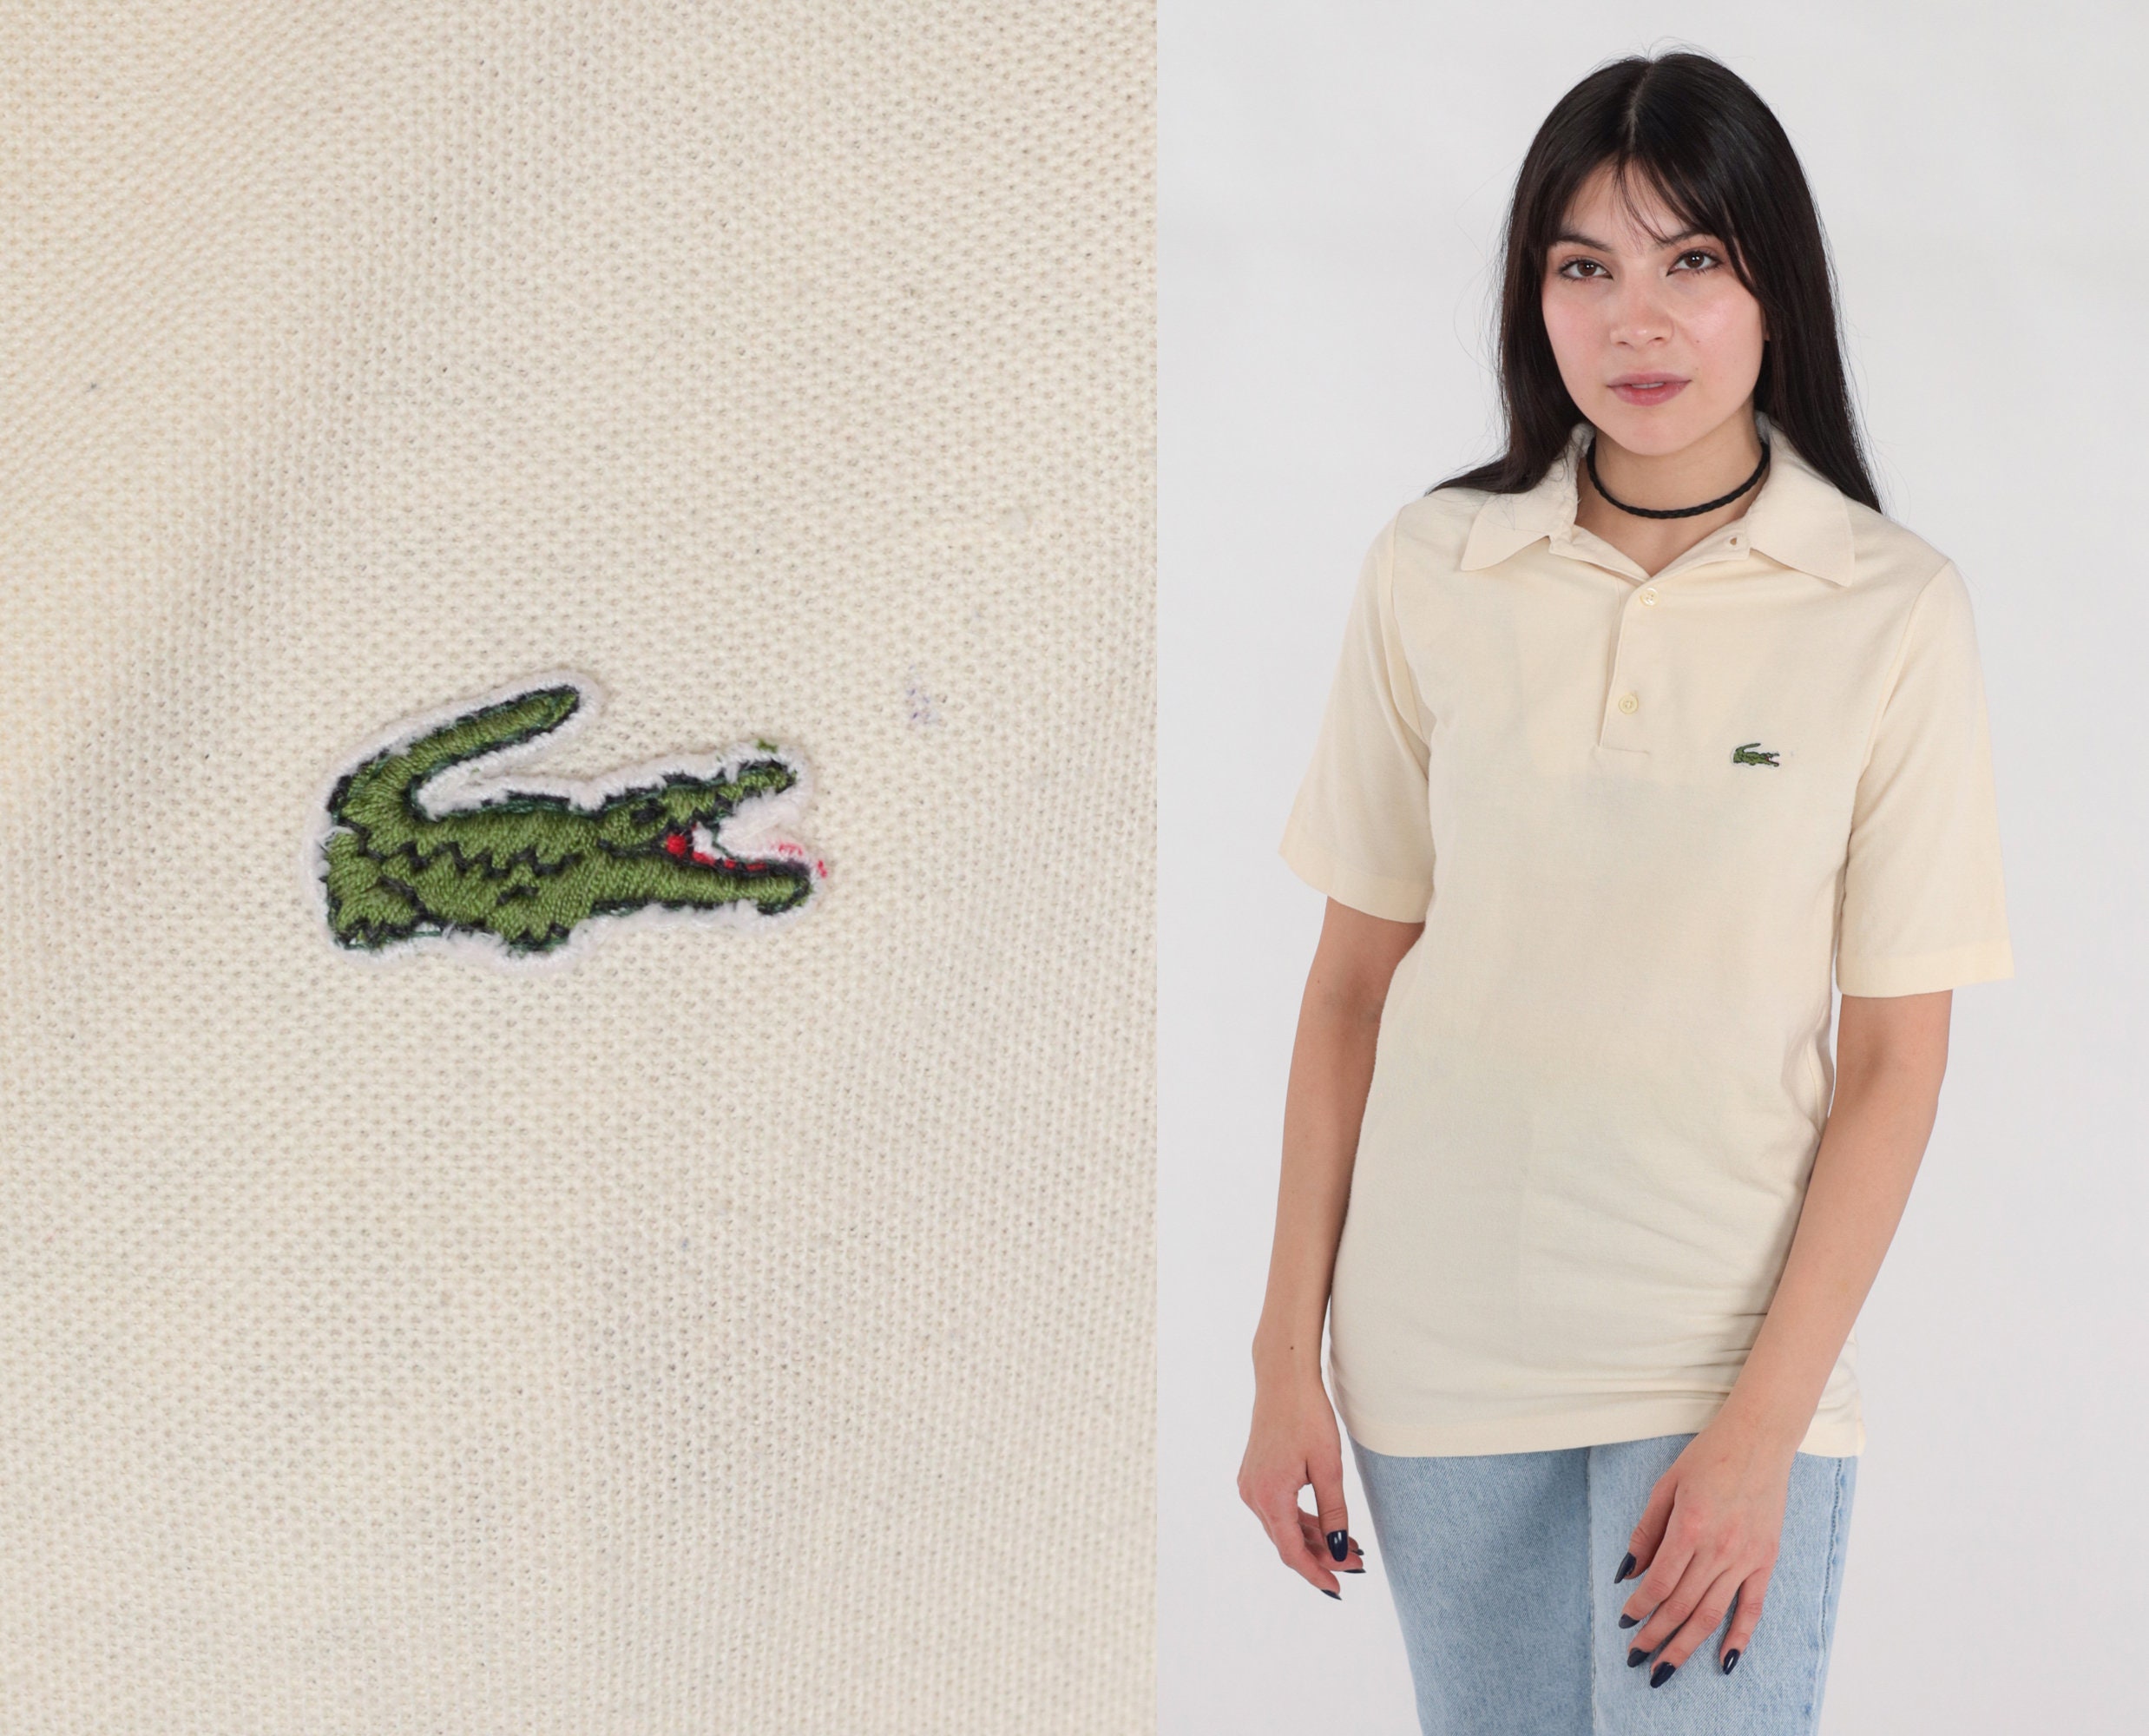 Lacoste Polo Shirt 80s Cream Collared Shirt Izod Crocodile T-shirt Retro  Preppy Collar Top Basic Simple Plain Neutral Vintage 1980s Small S - Etsy